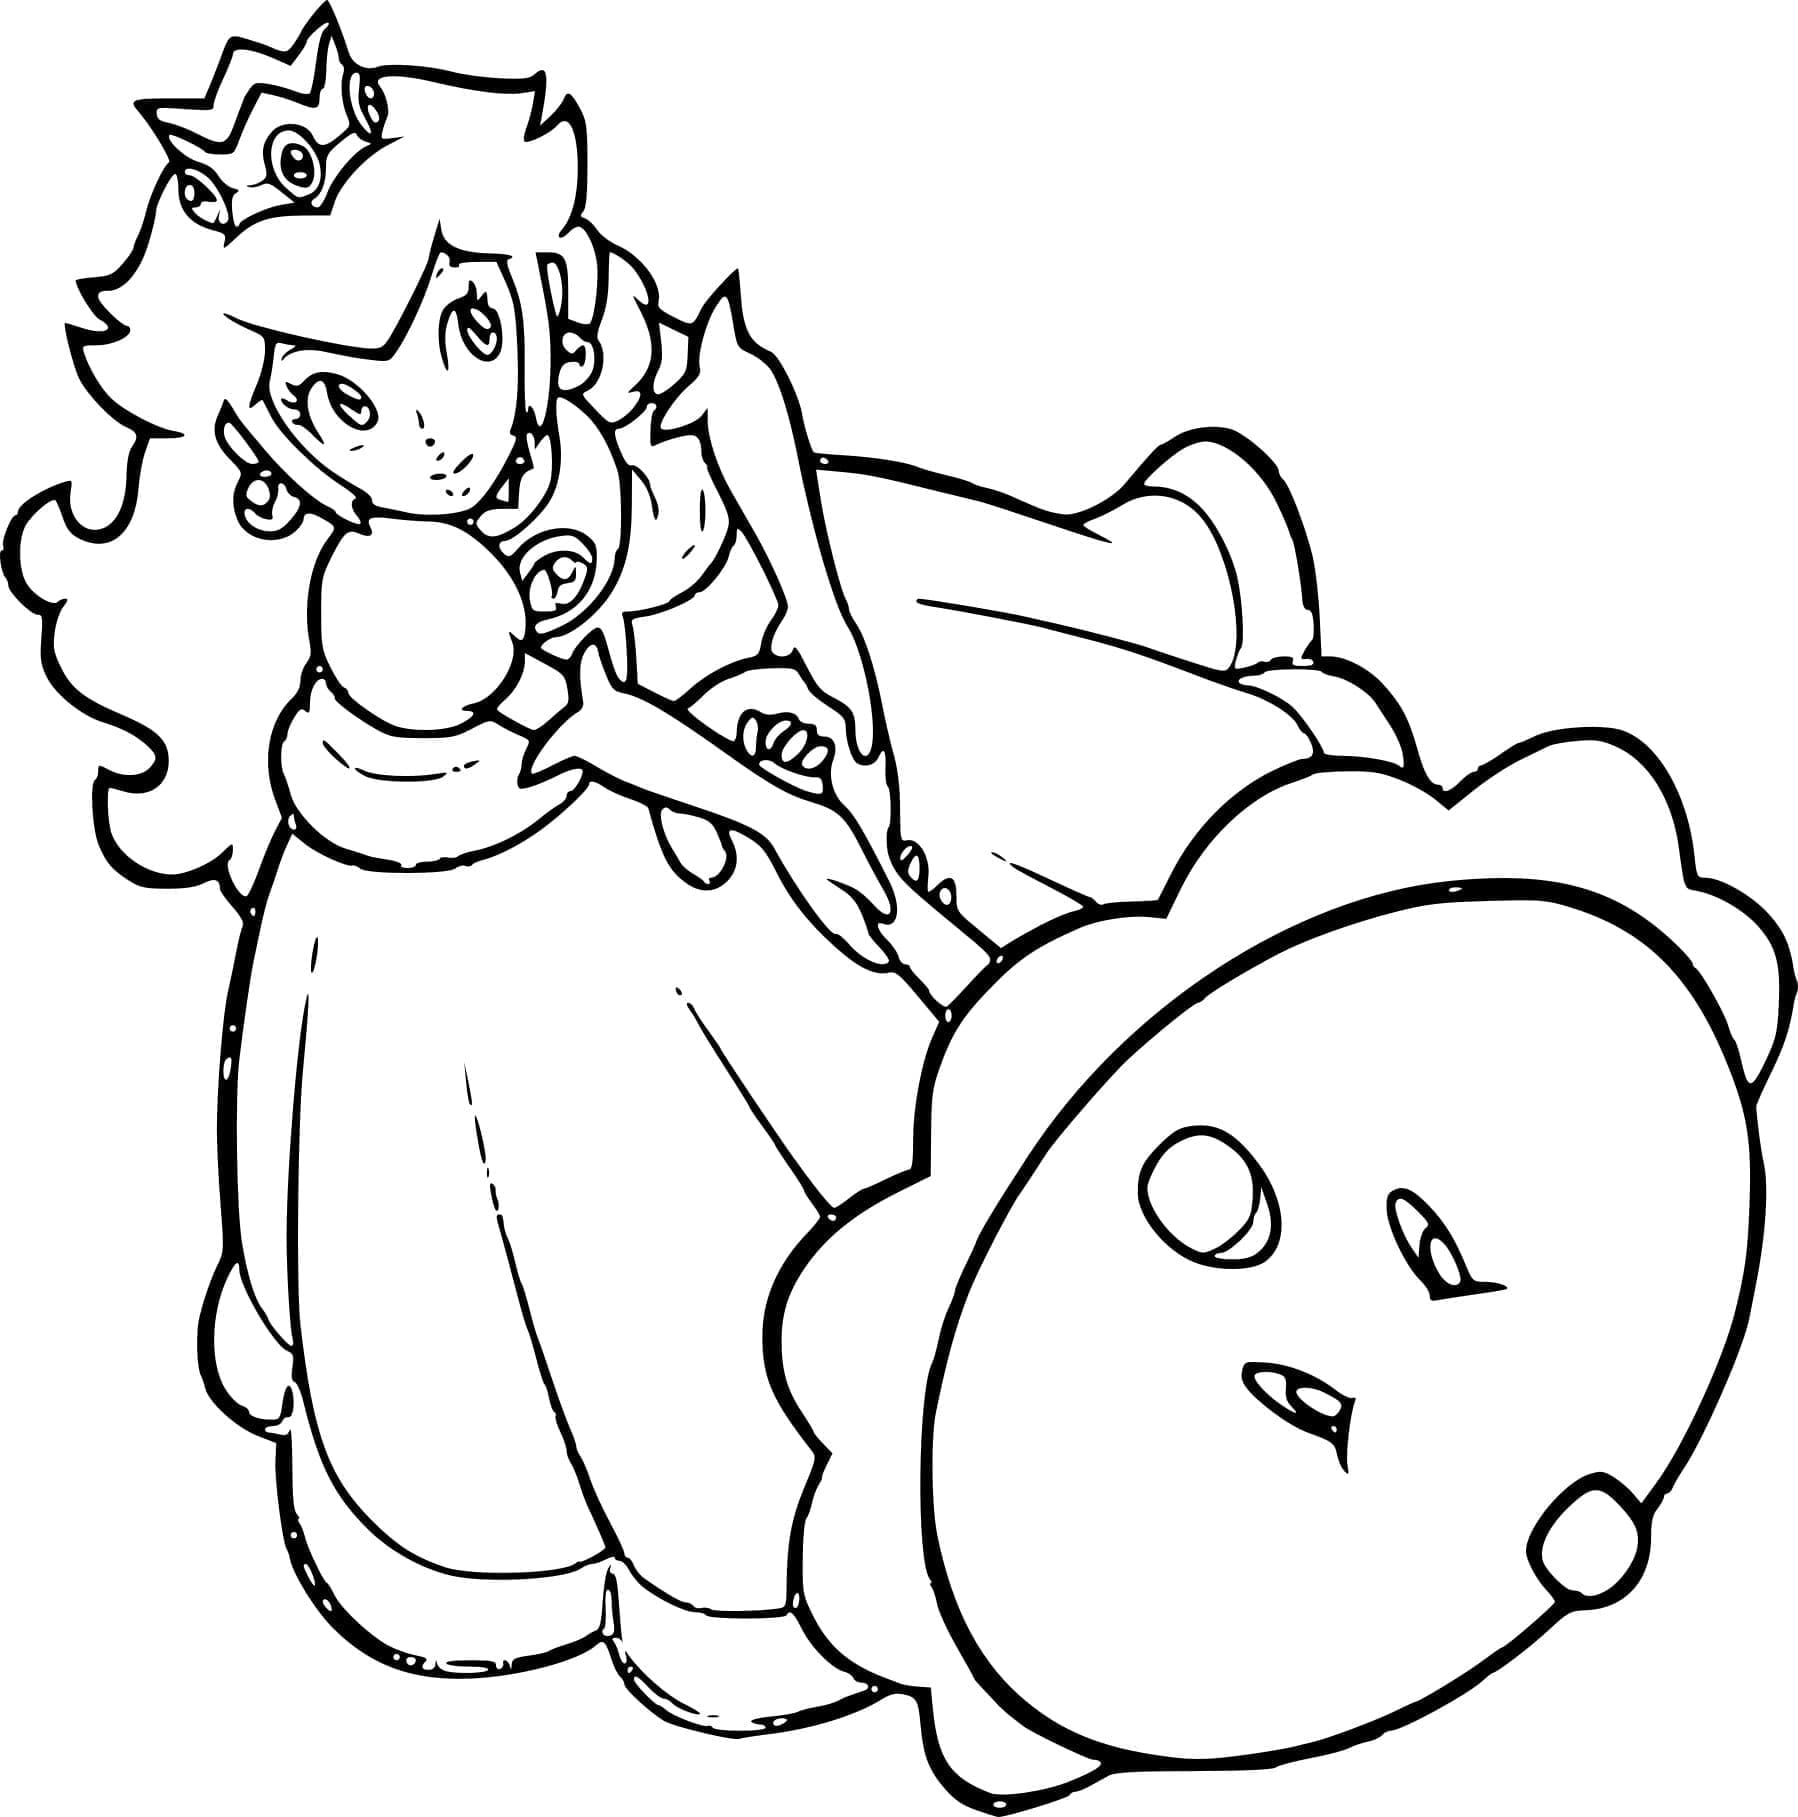 Princesse Peach Incroyable coloring page